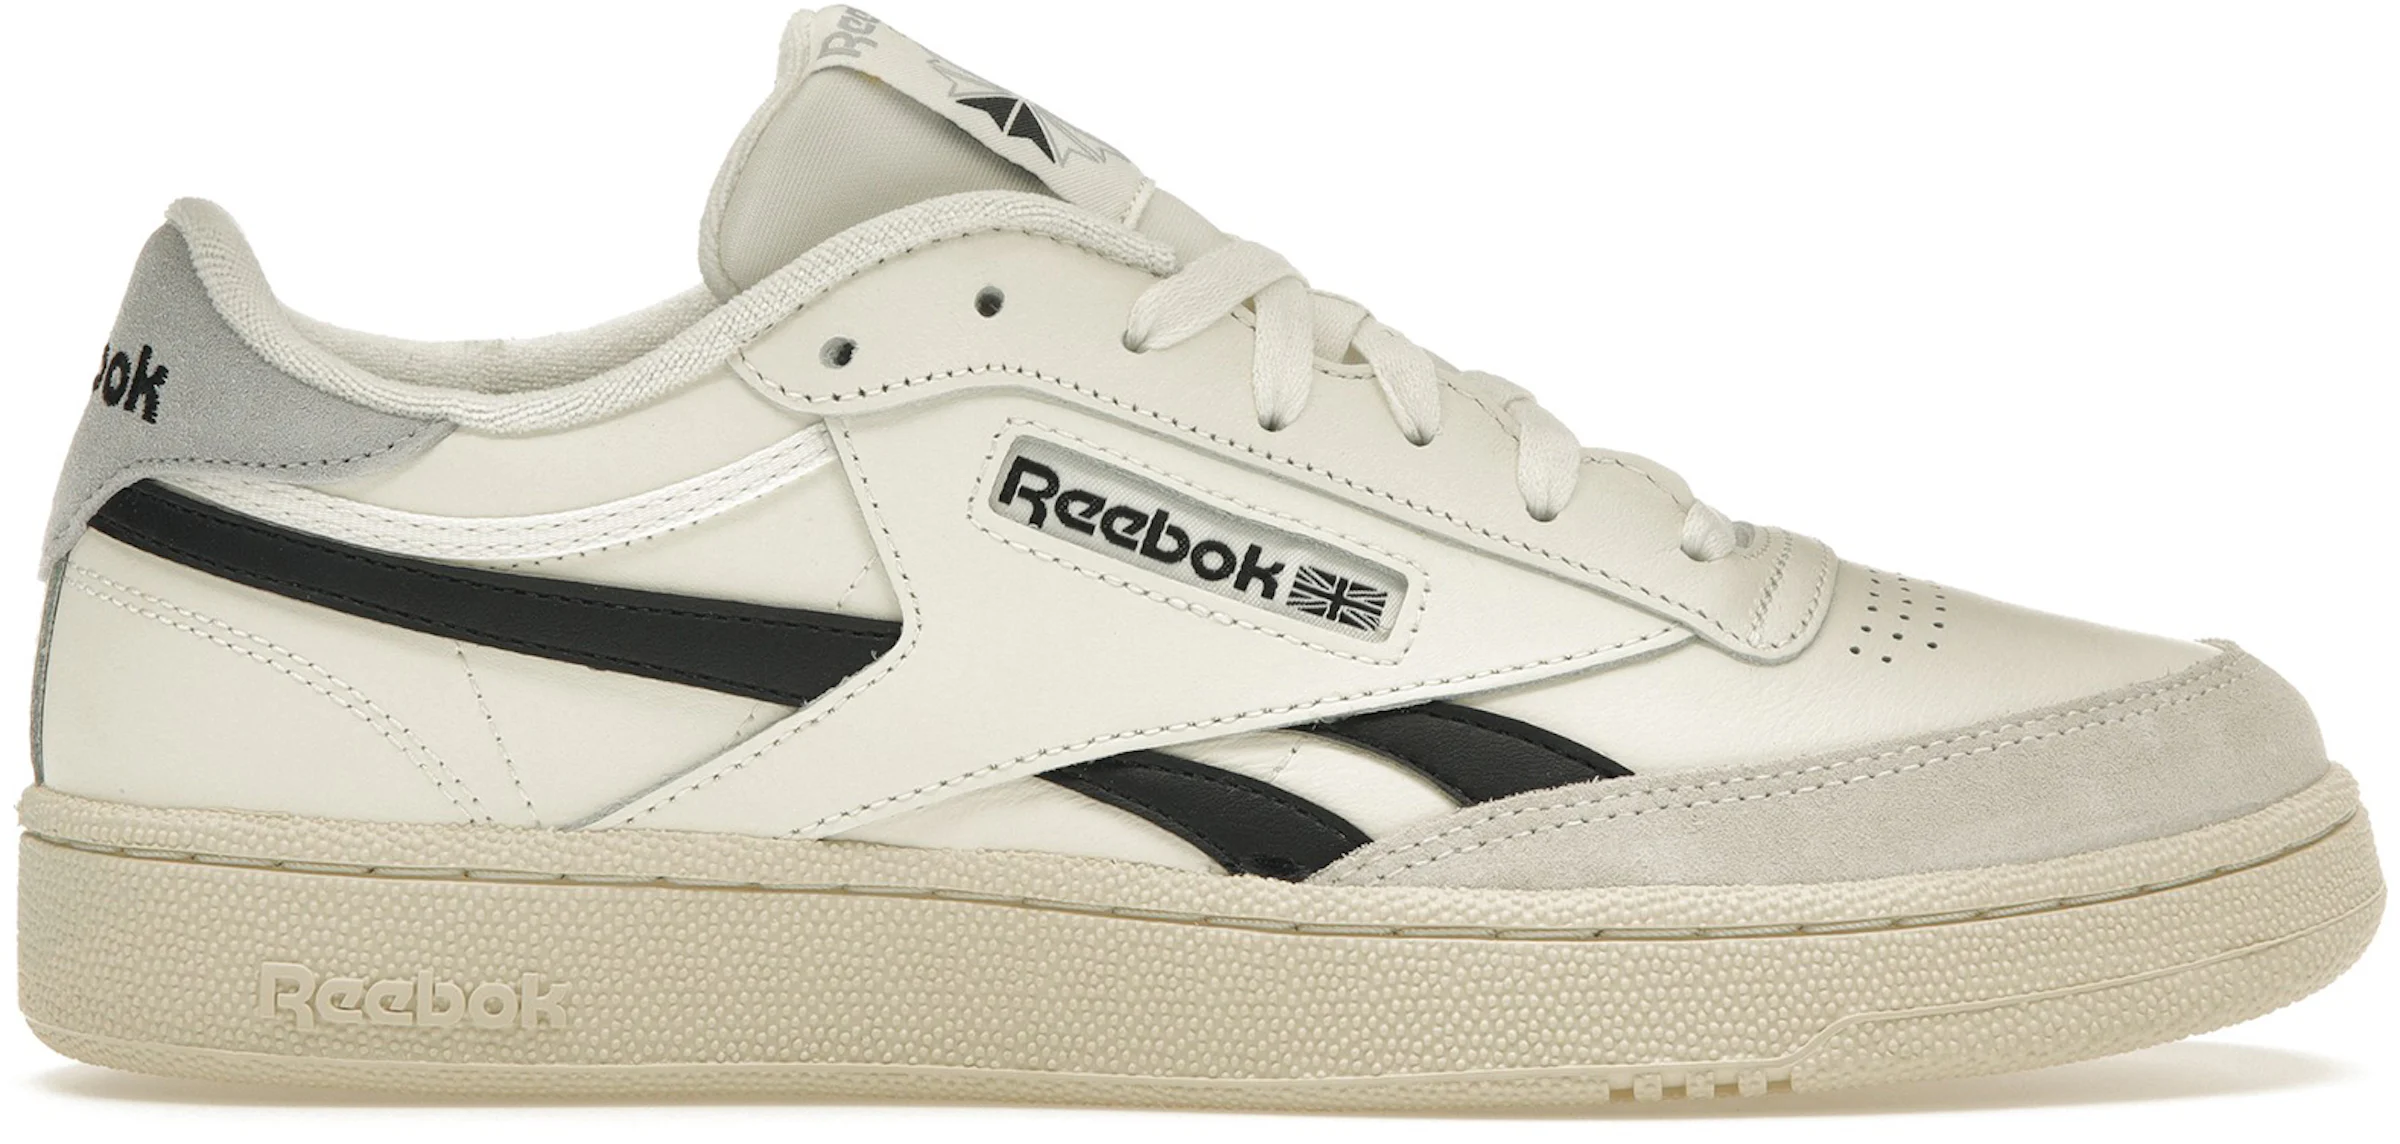  Reebok Men's Club C Sneaker, White/Vector Red, 12